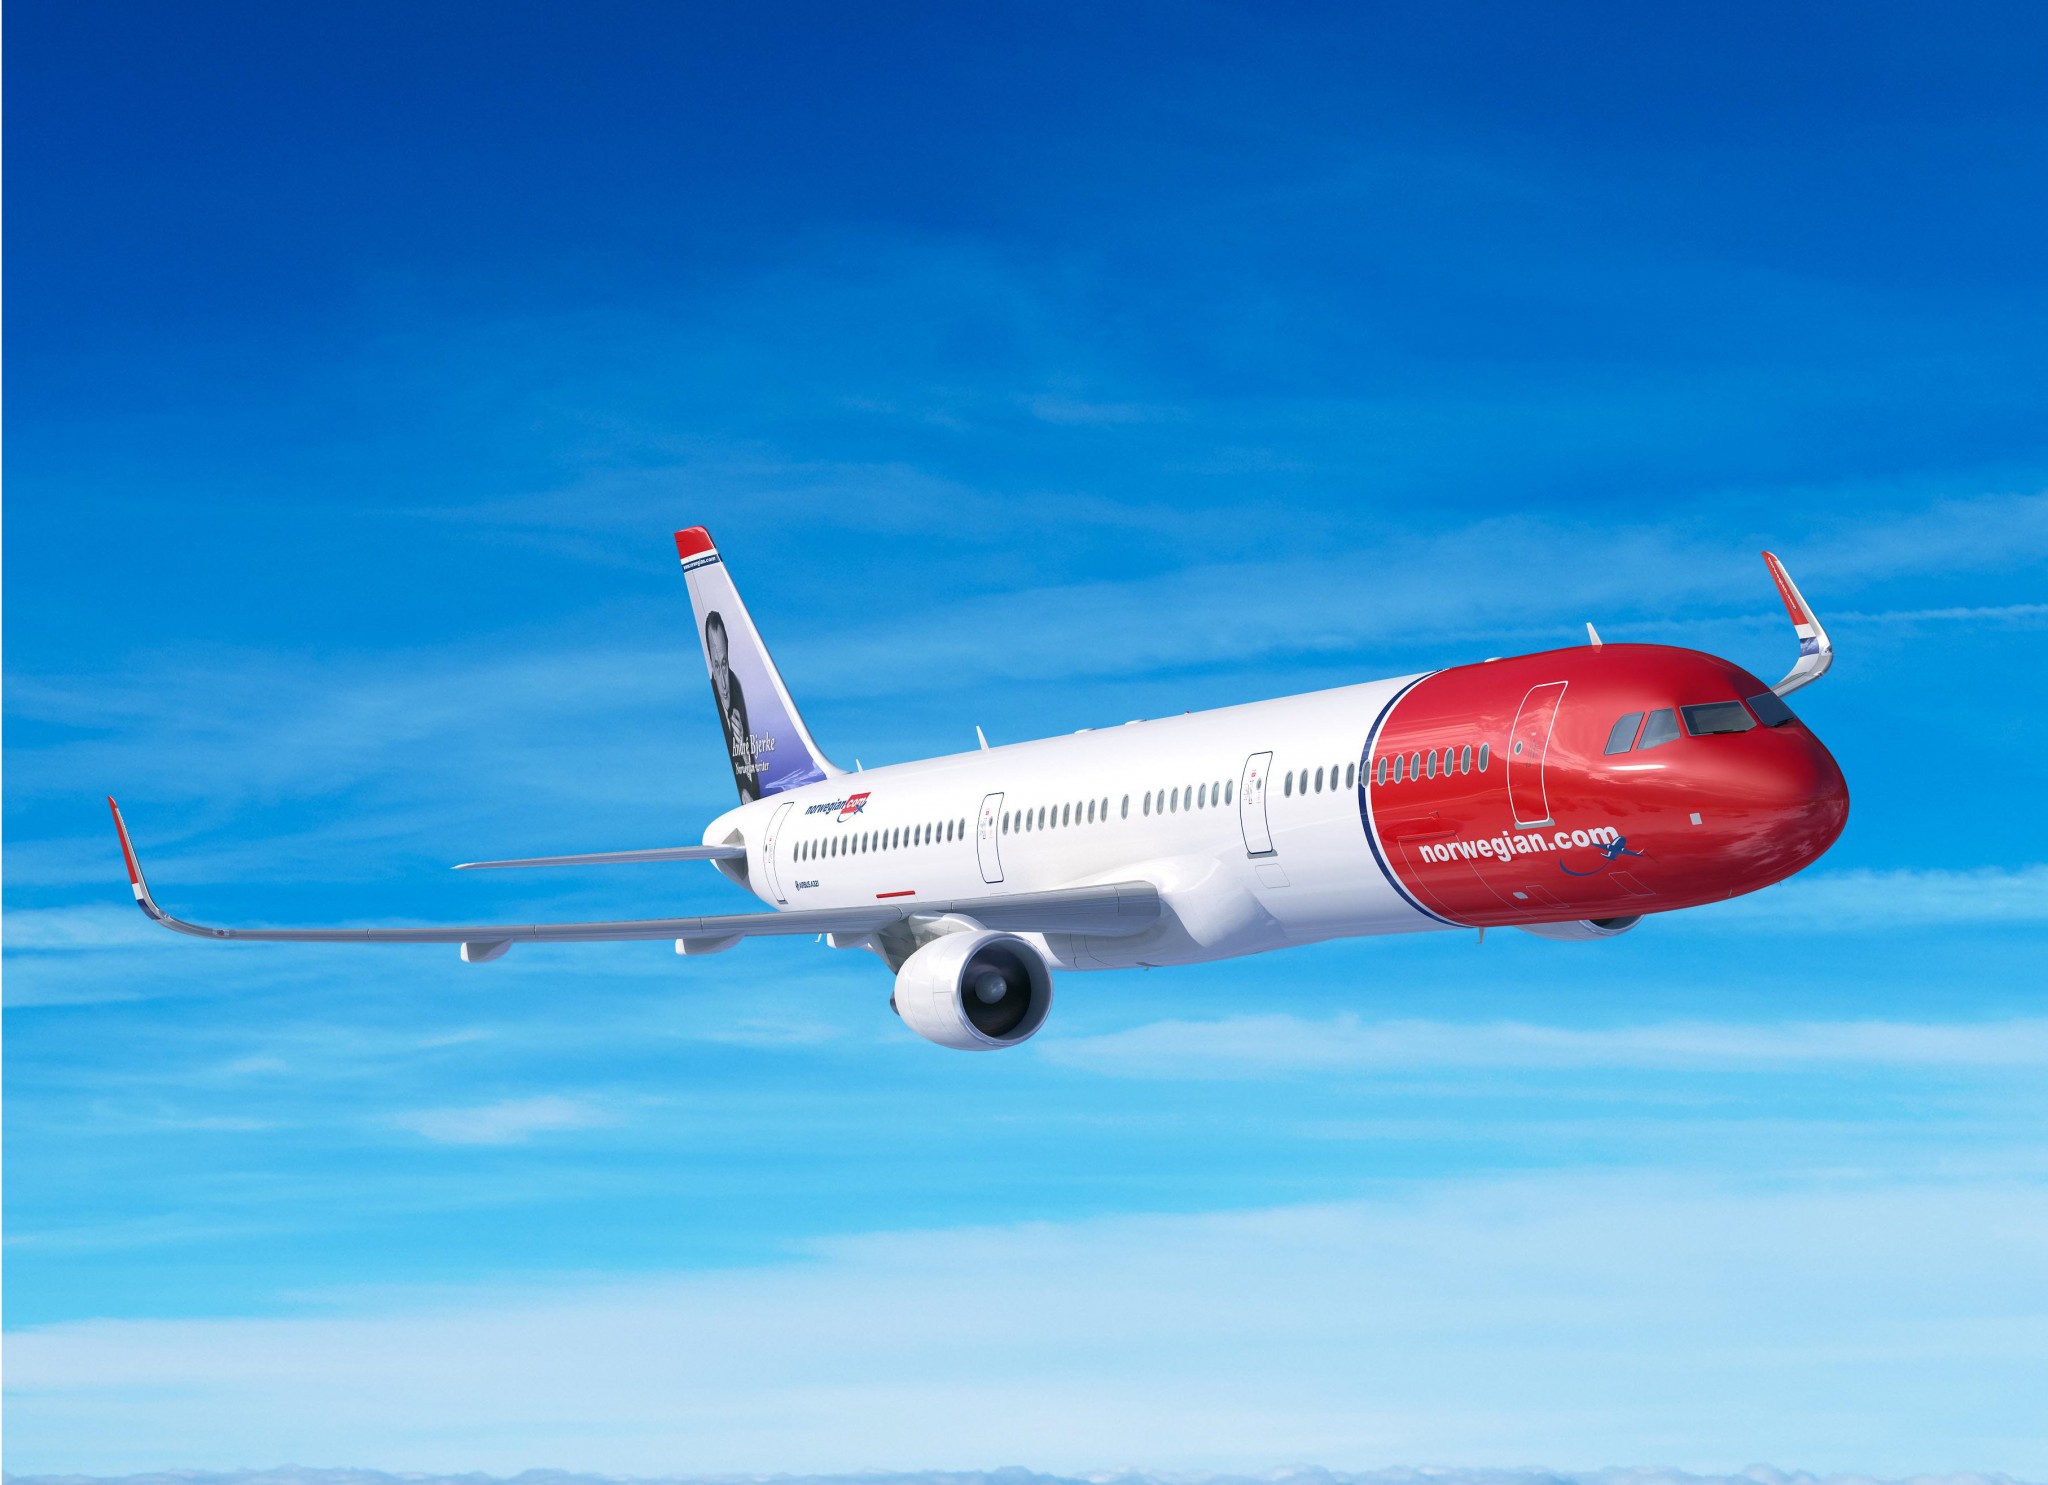 Norwegian reports 20 percent passenger growth in January